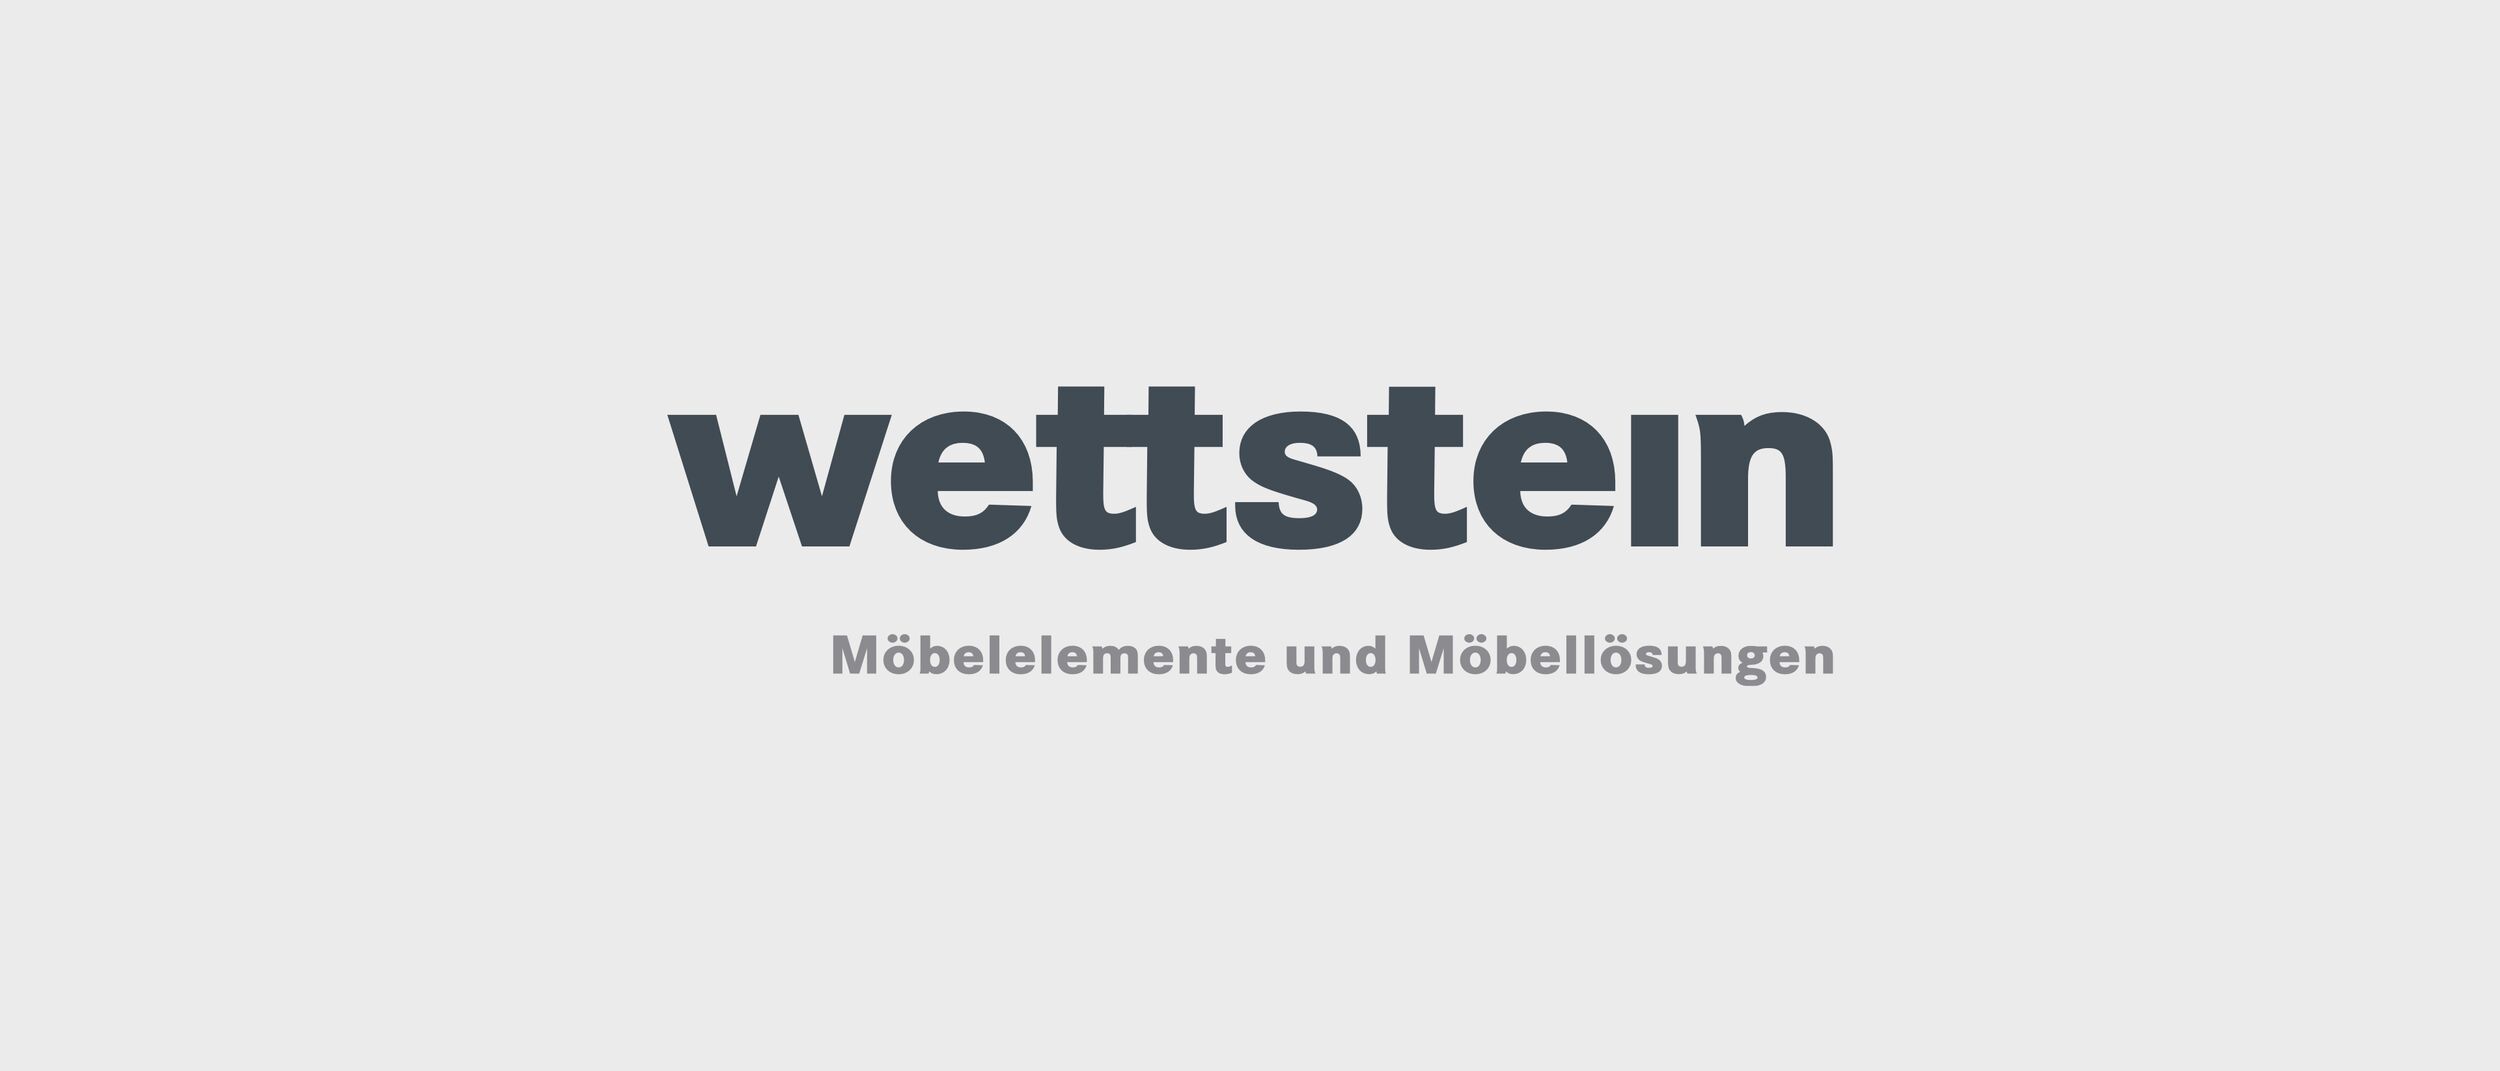 Wettstein - Branding